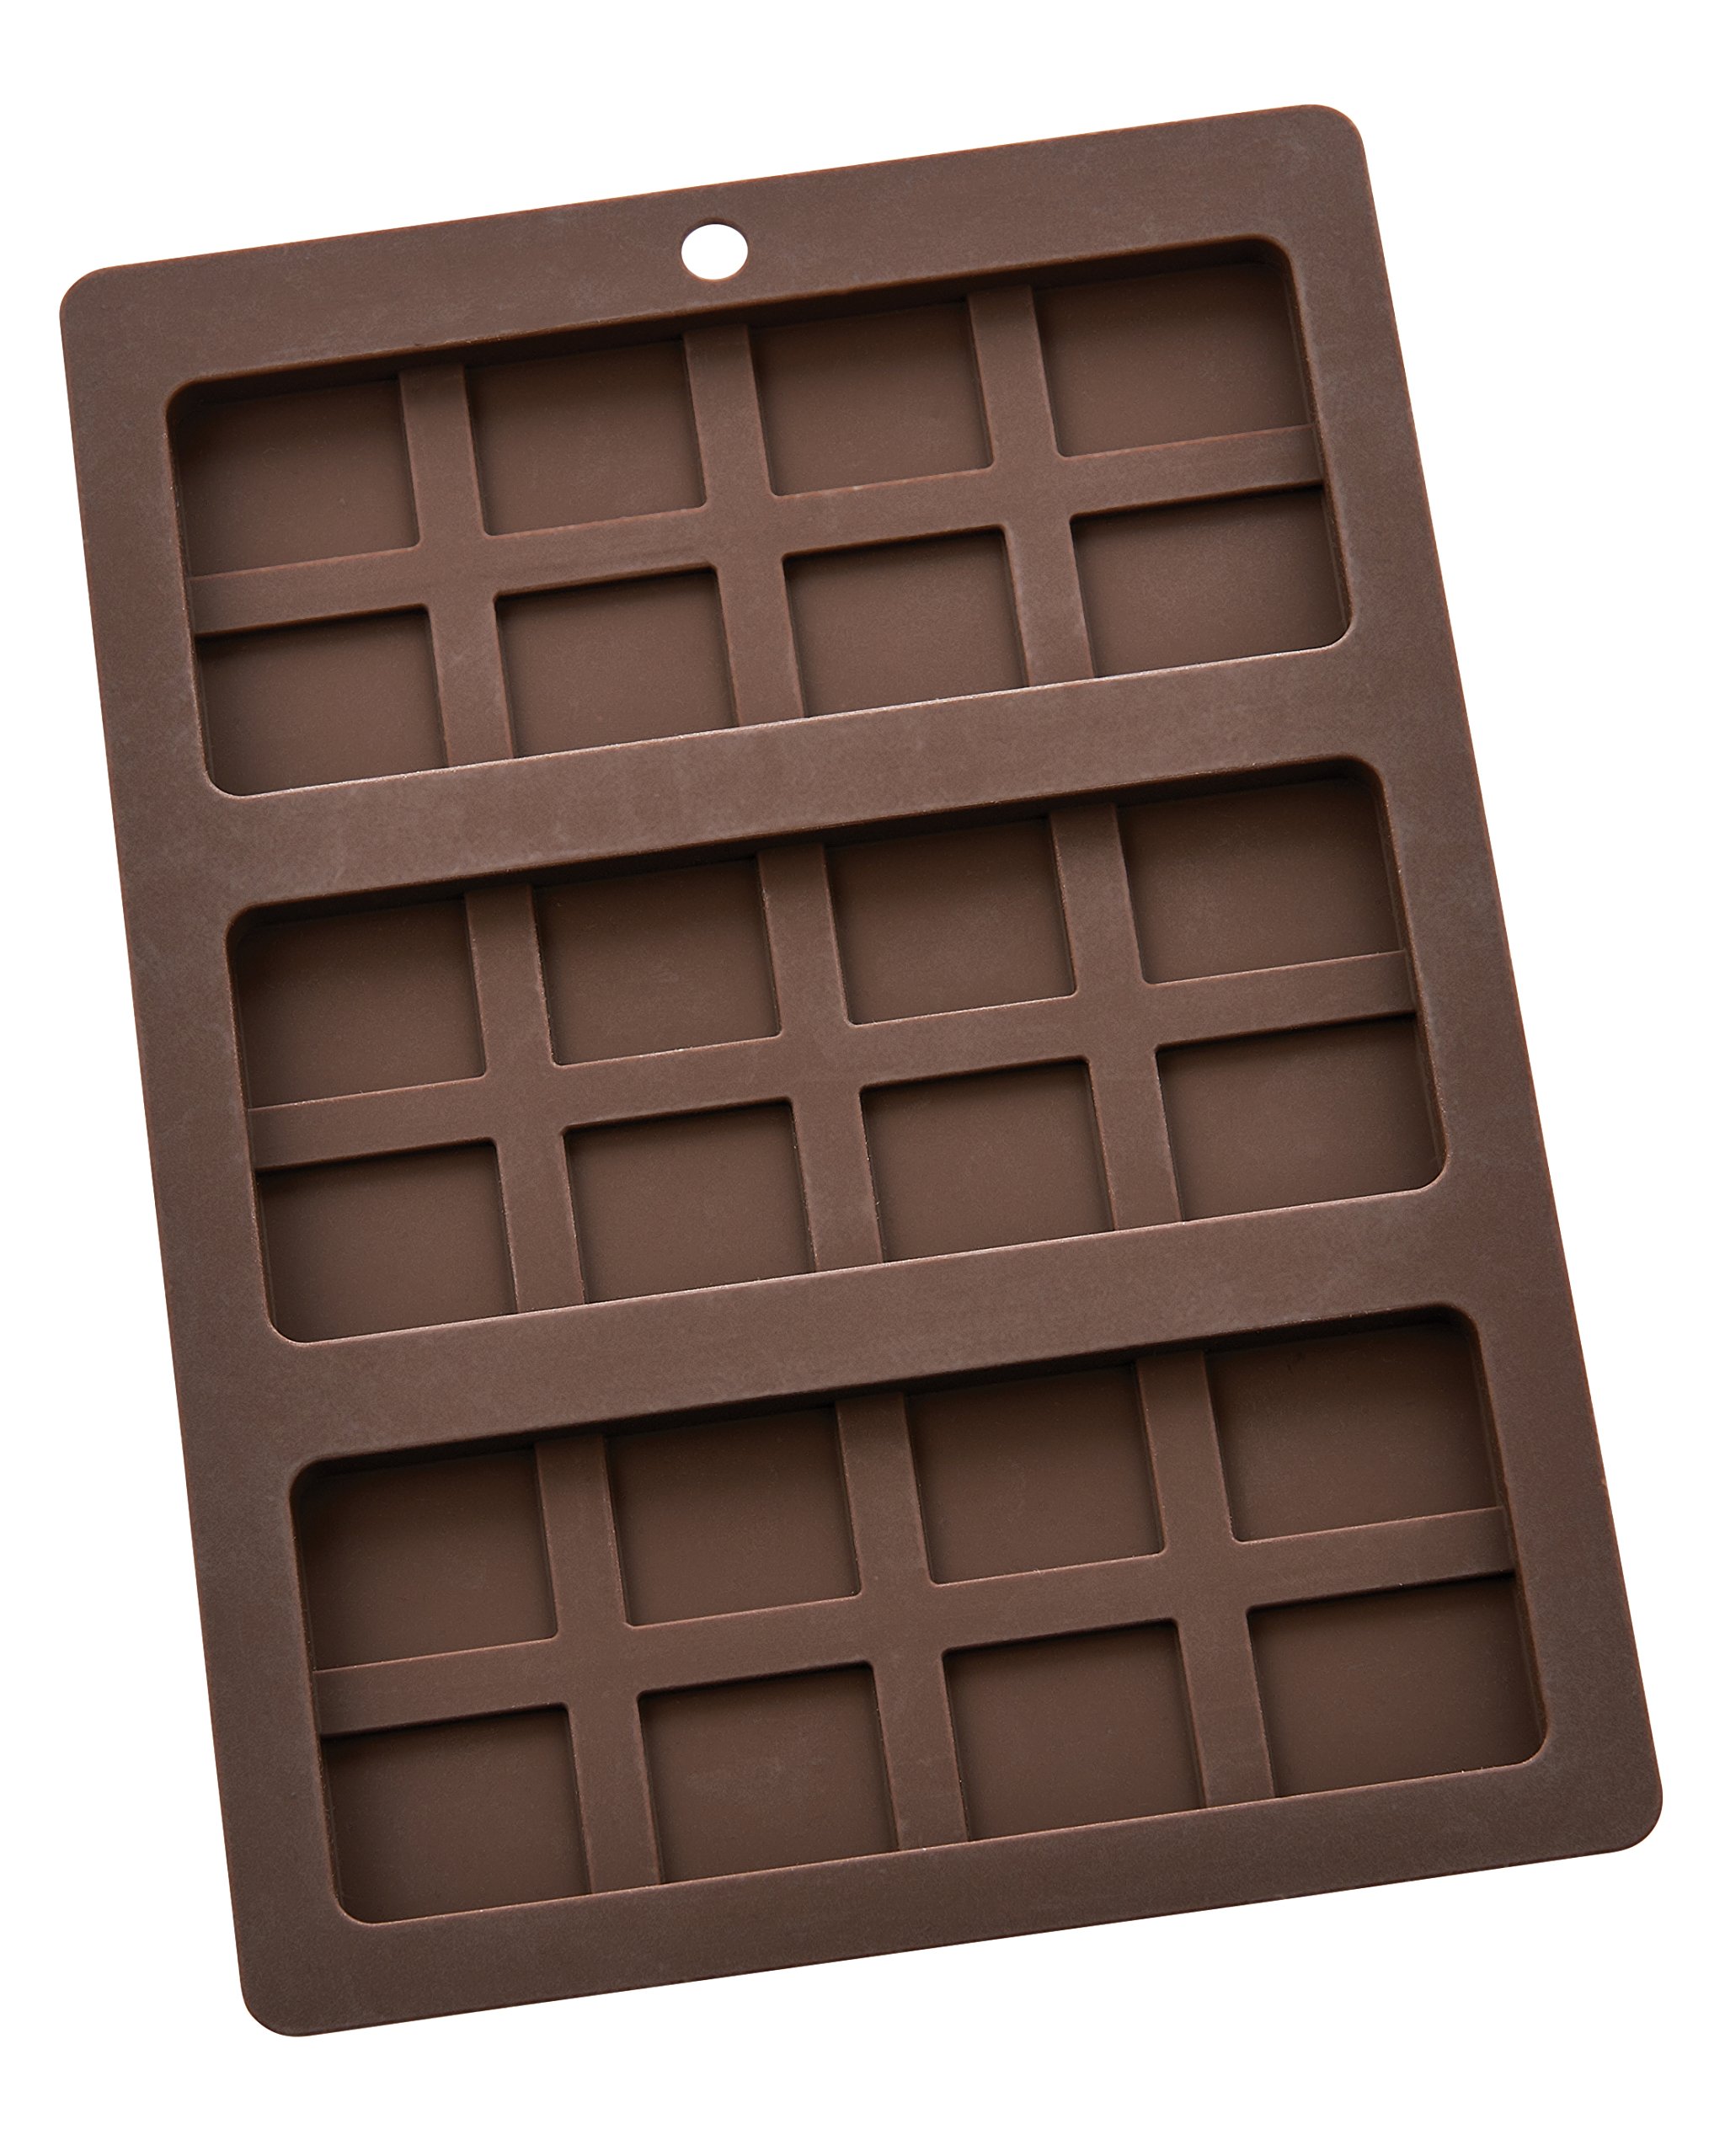 Mrs. Anderson’s Baking Triple Chocolate Bar Mold, Non-Stick European-Grade Silicone, Makes 3 Standard-Sized Chocolate Bars